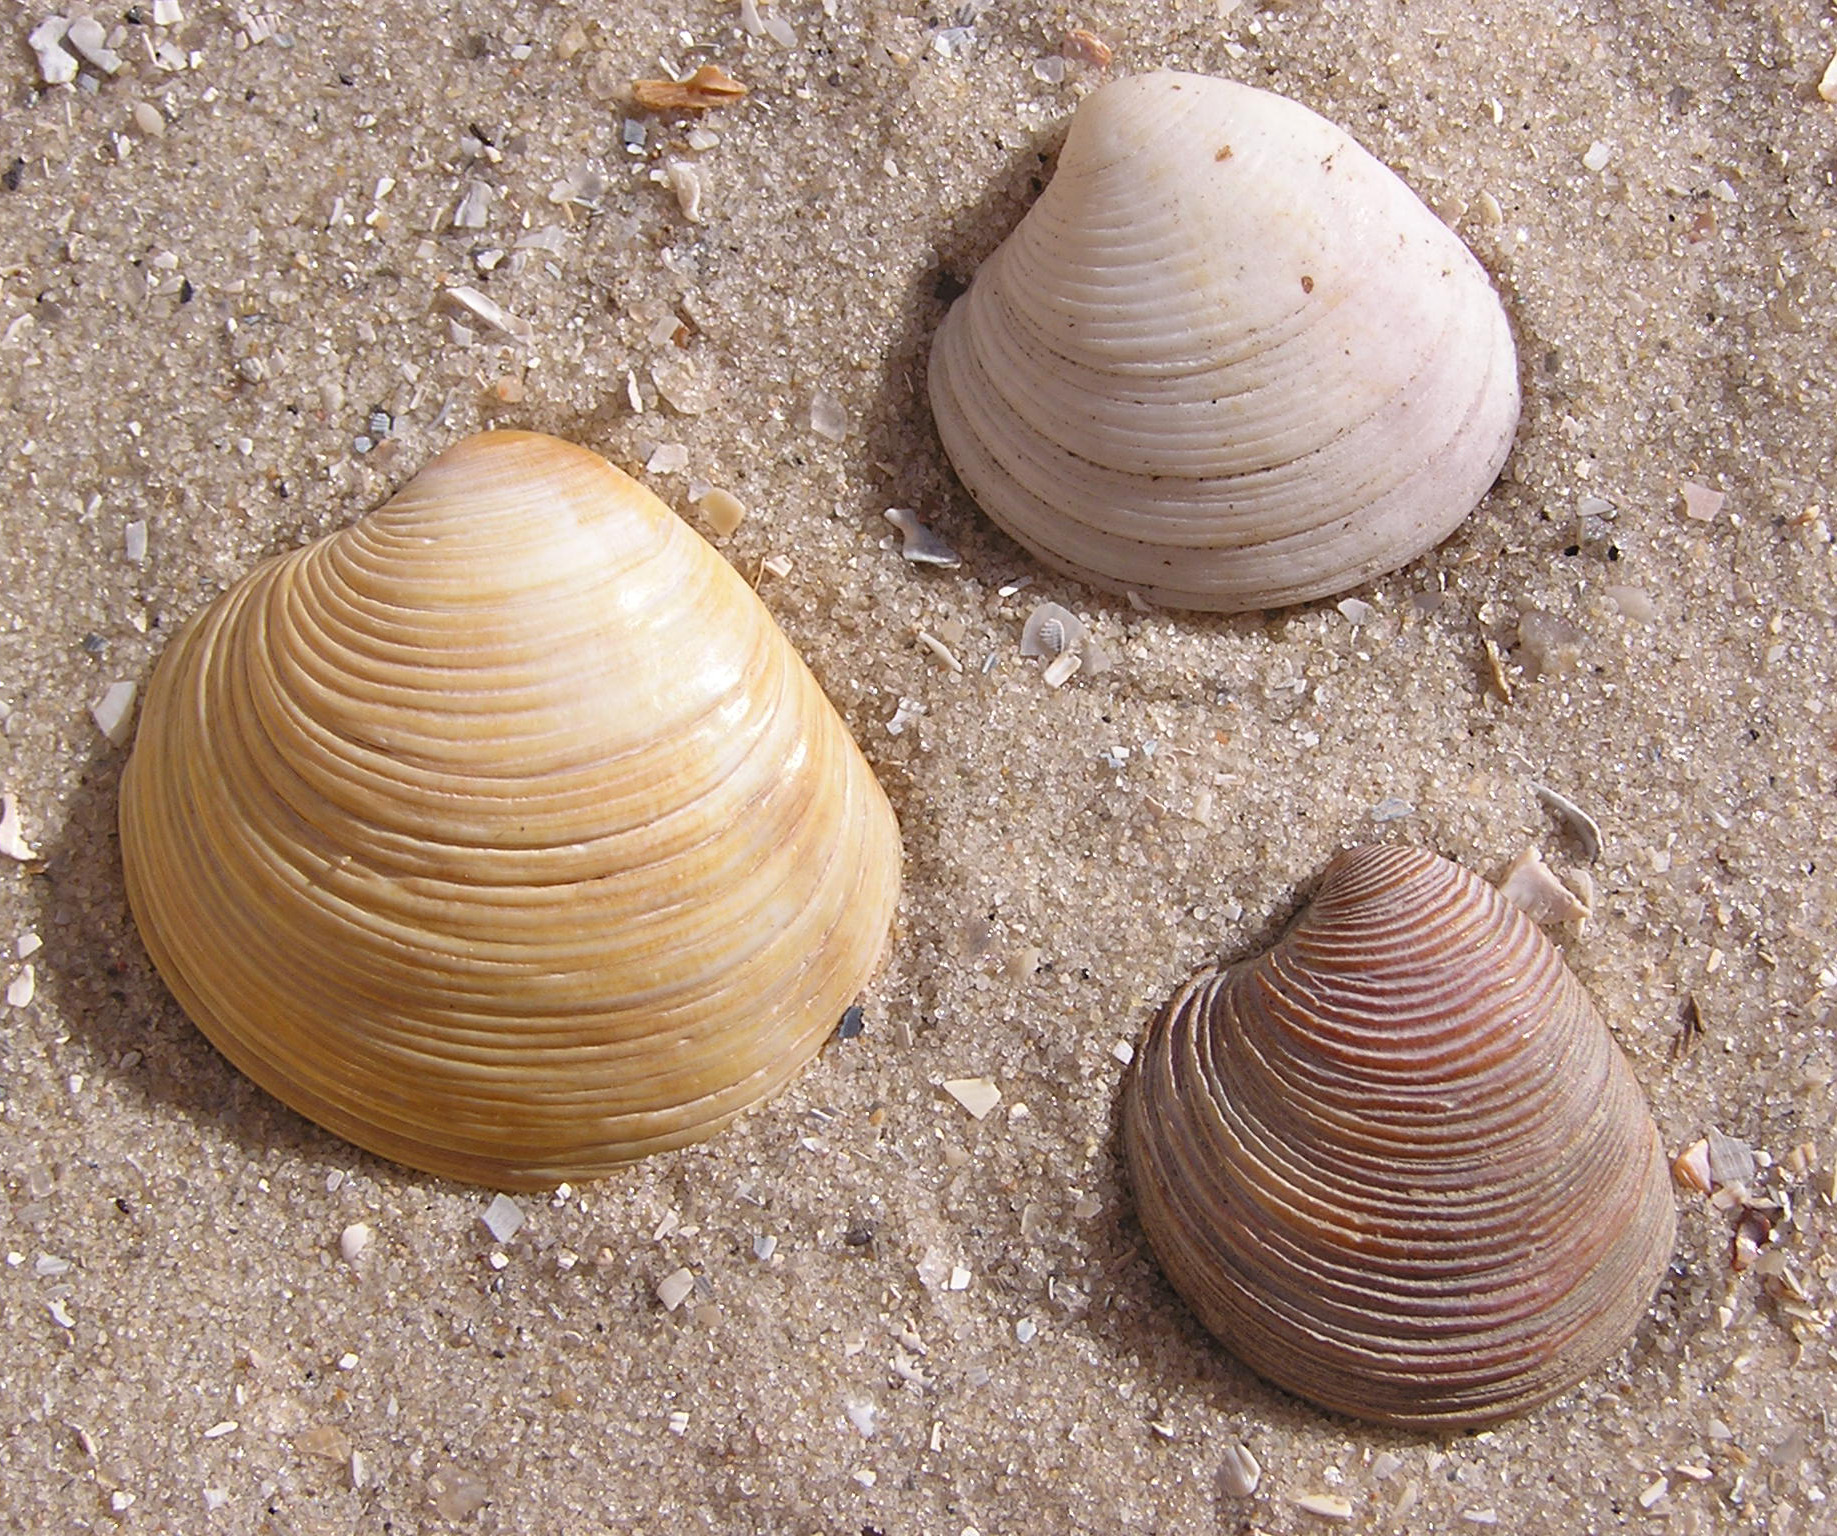 File:3 Chamelea gallina shells.jpg - Wikimedia Commons